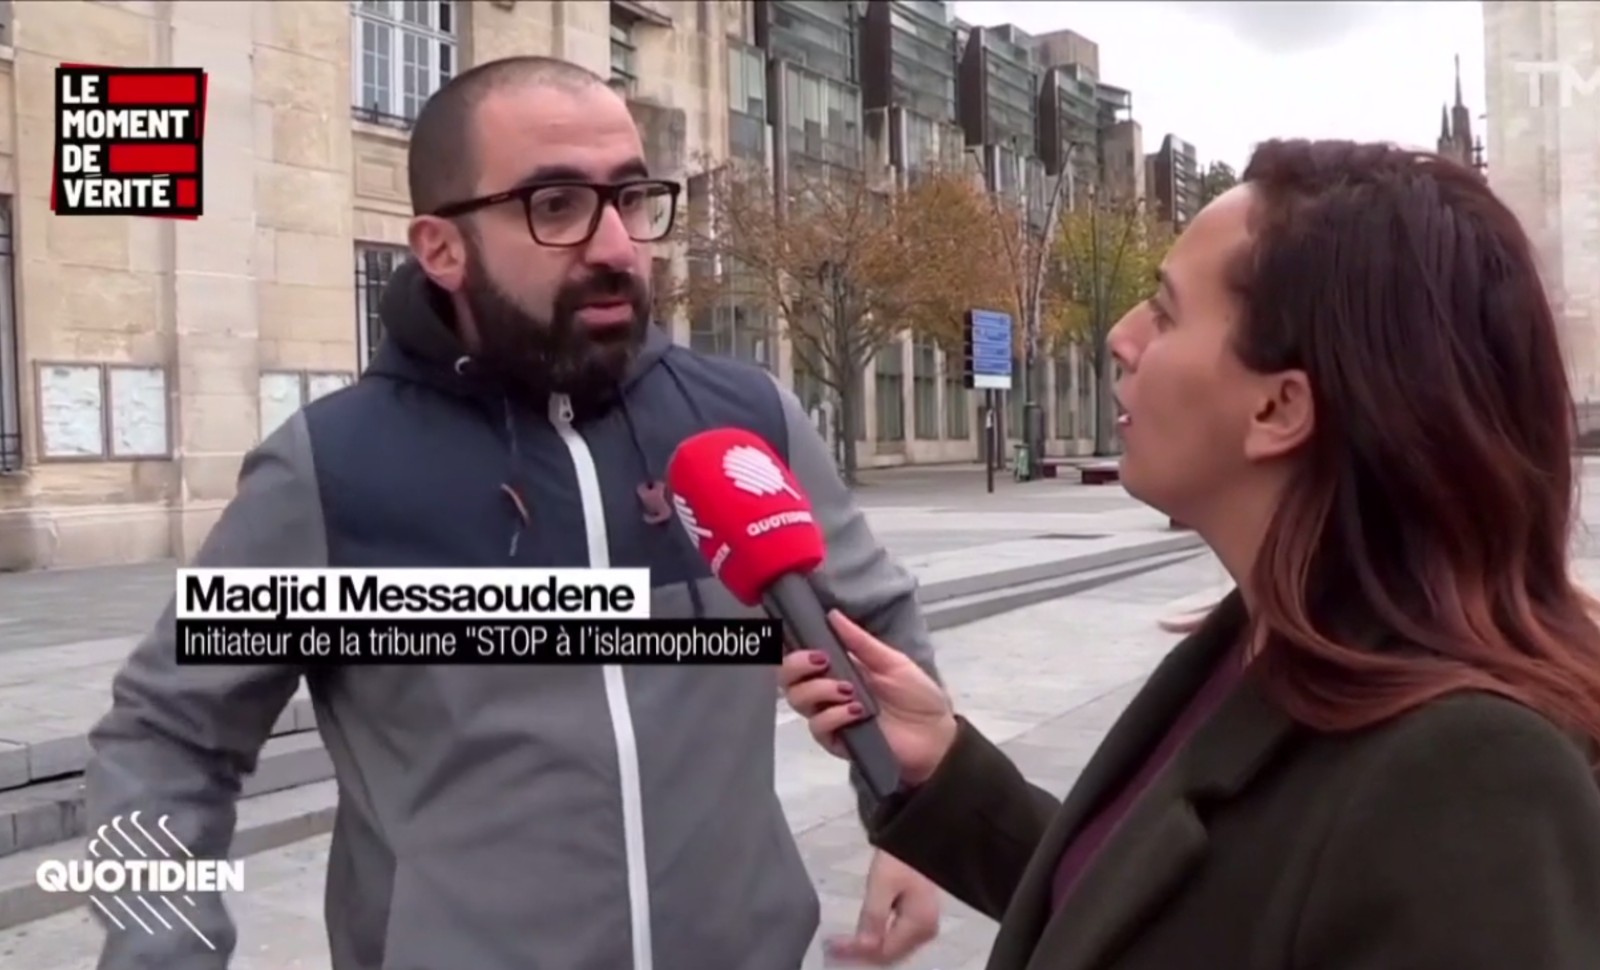 Madjid Messaoudene: un drôle de militant contre « l’islamophobie »